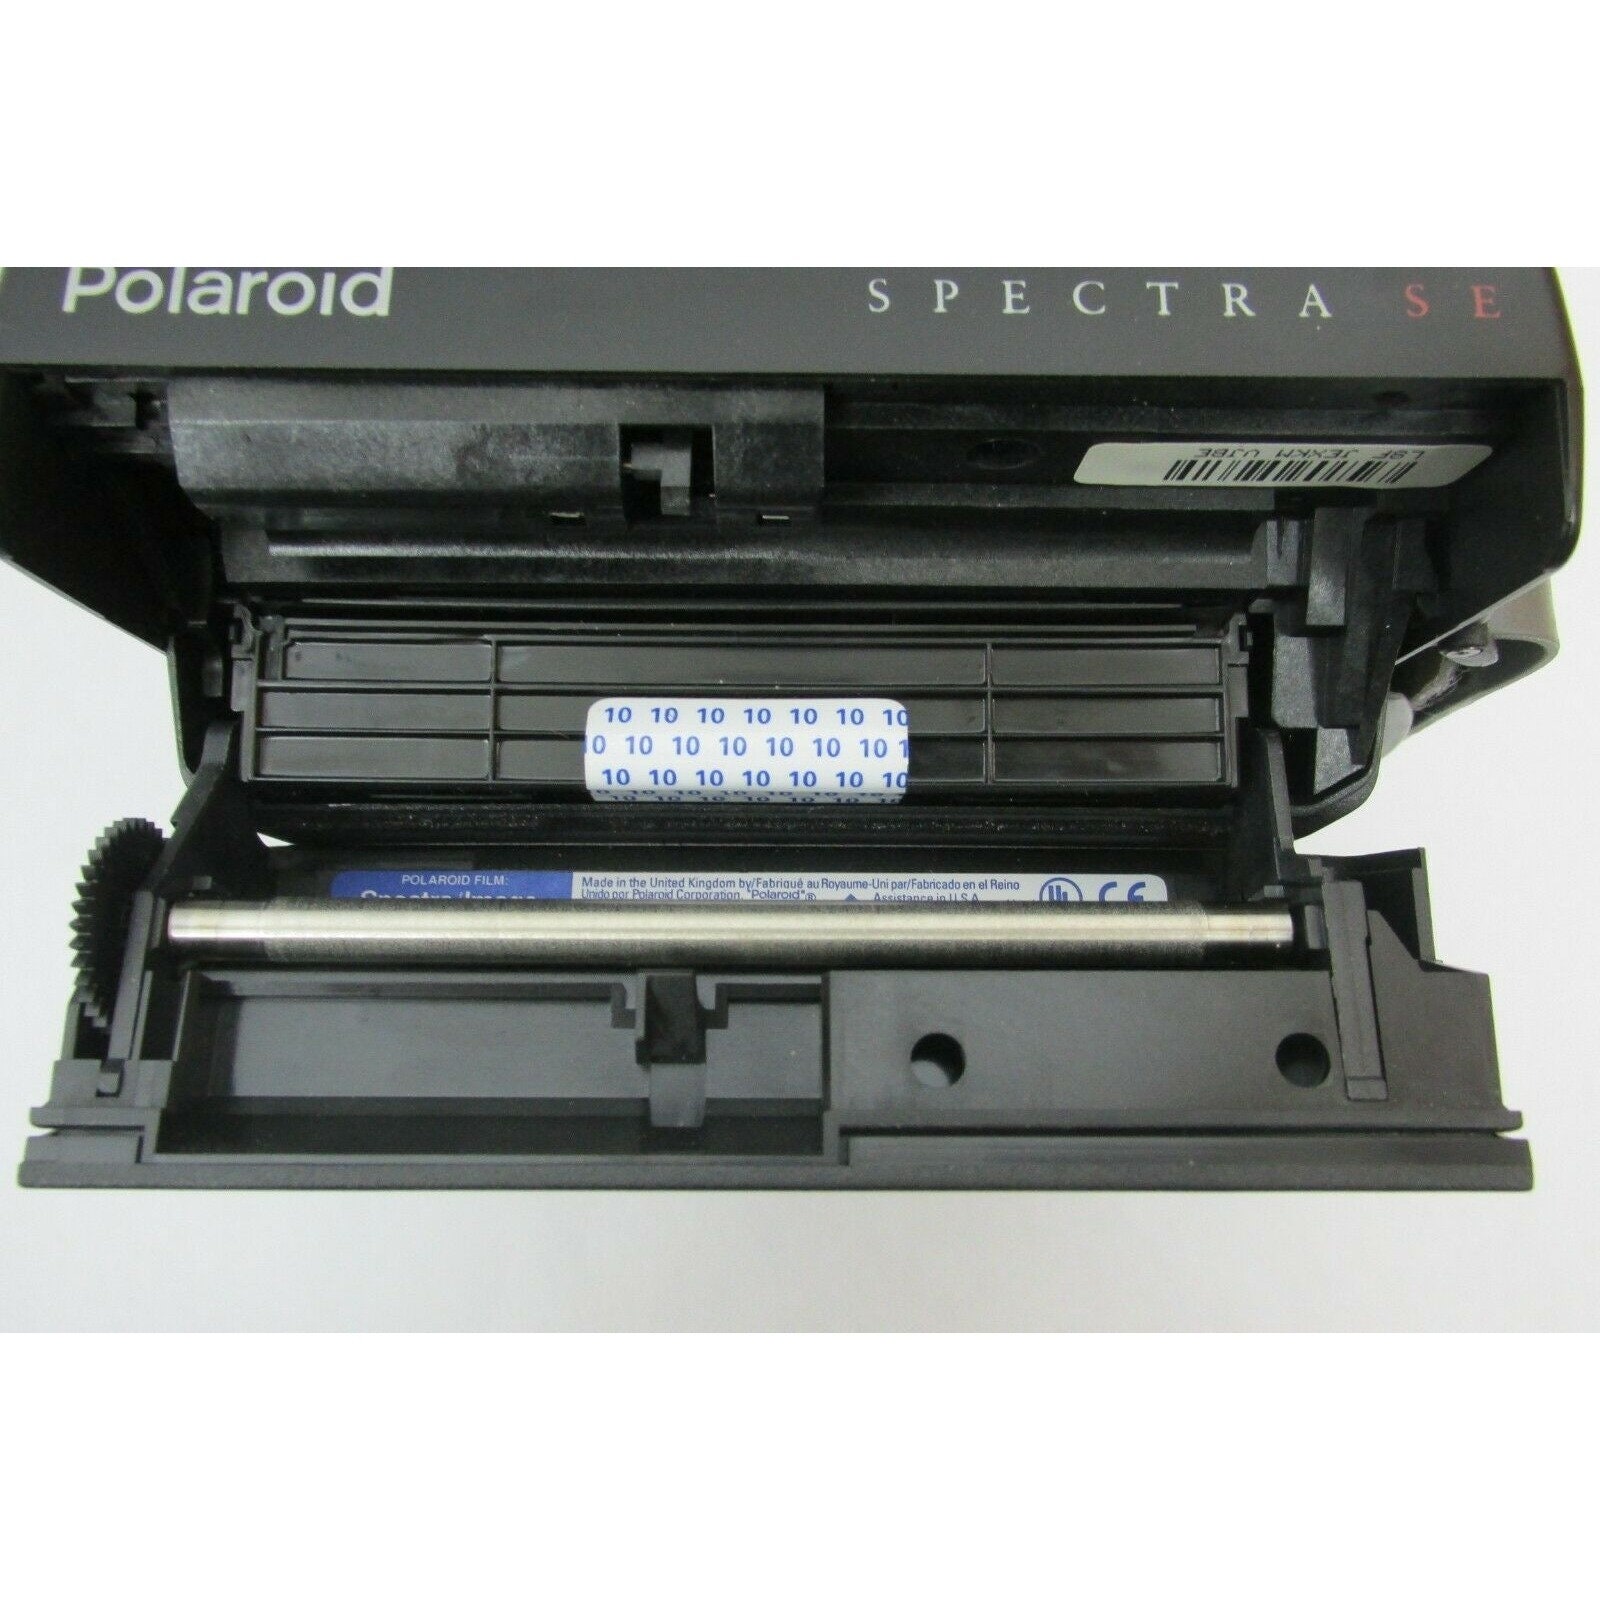 Lote de cartuchos POLAROID SPECTRA - Polaroid Argentina